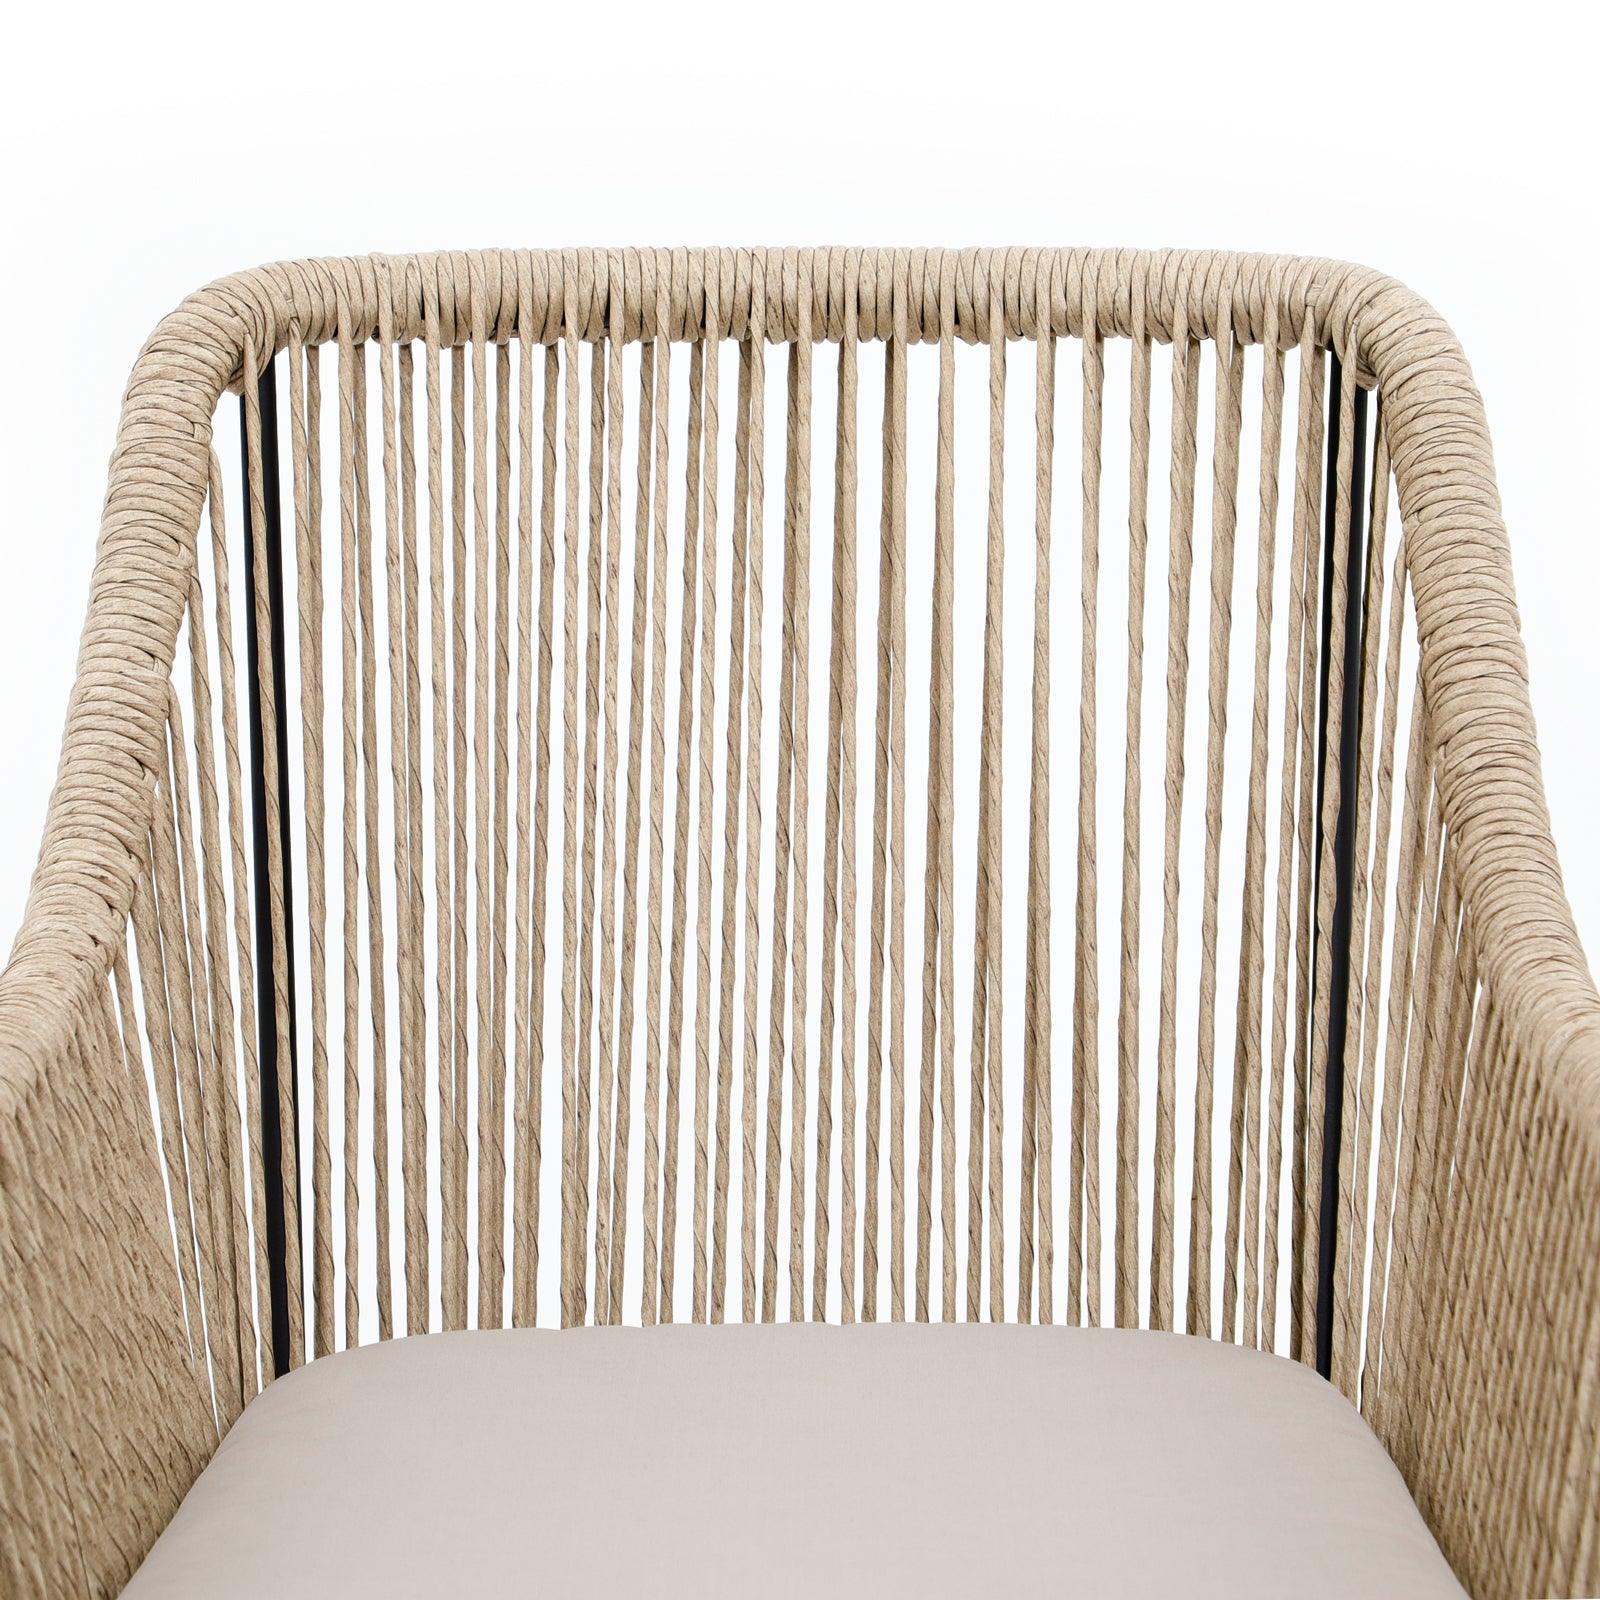 Hallerbos bar height chair, beige rattan-Jardina furniture #Color_Natural